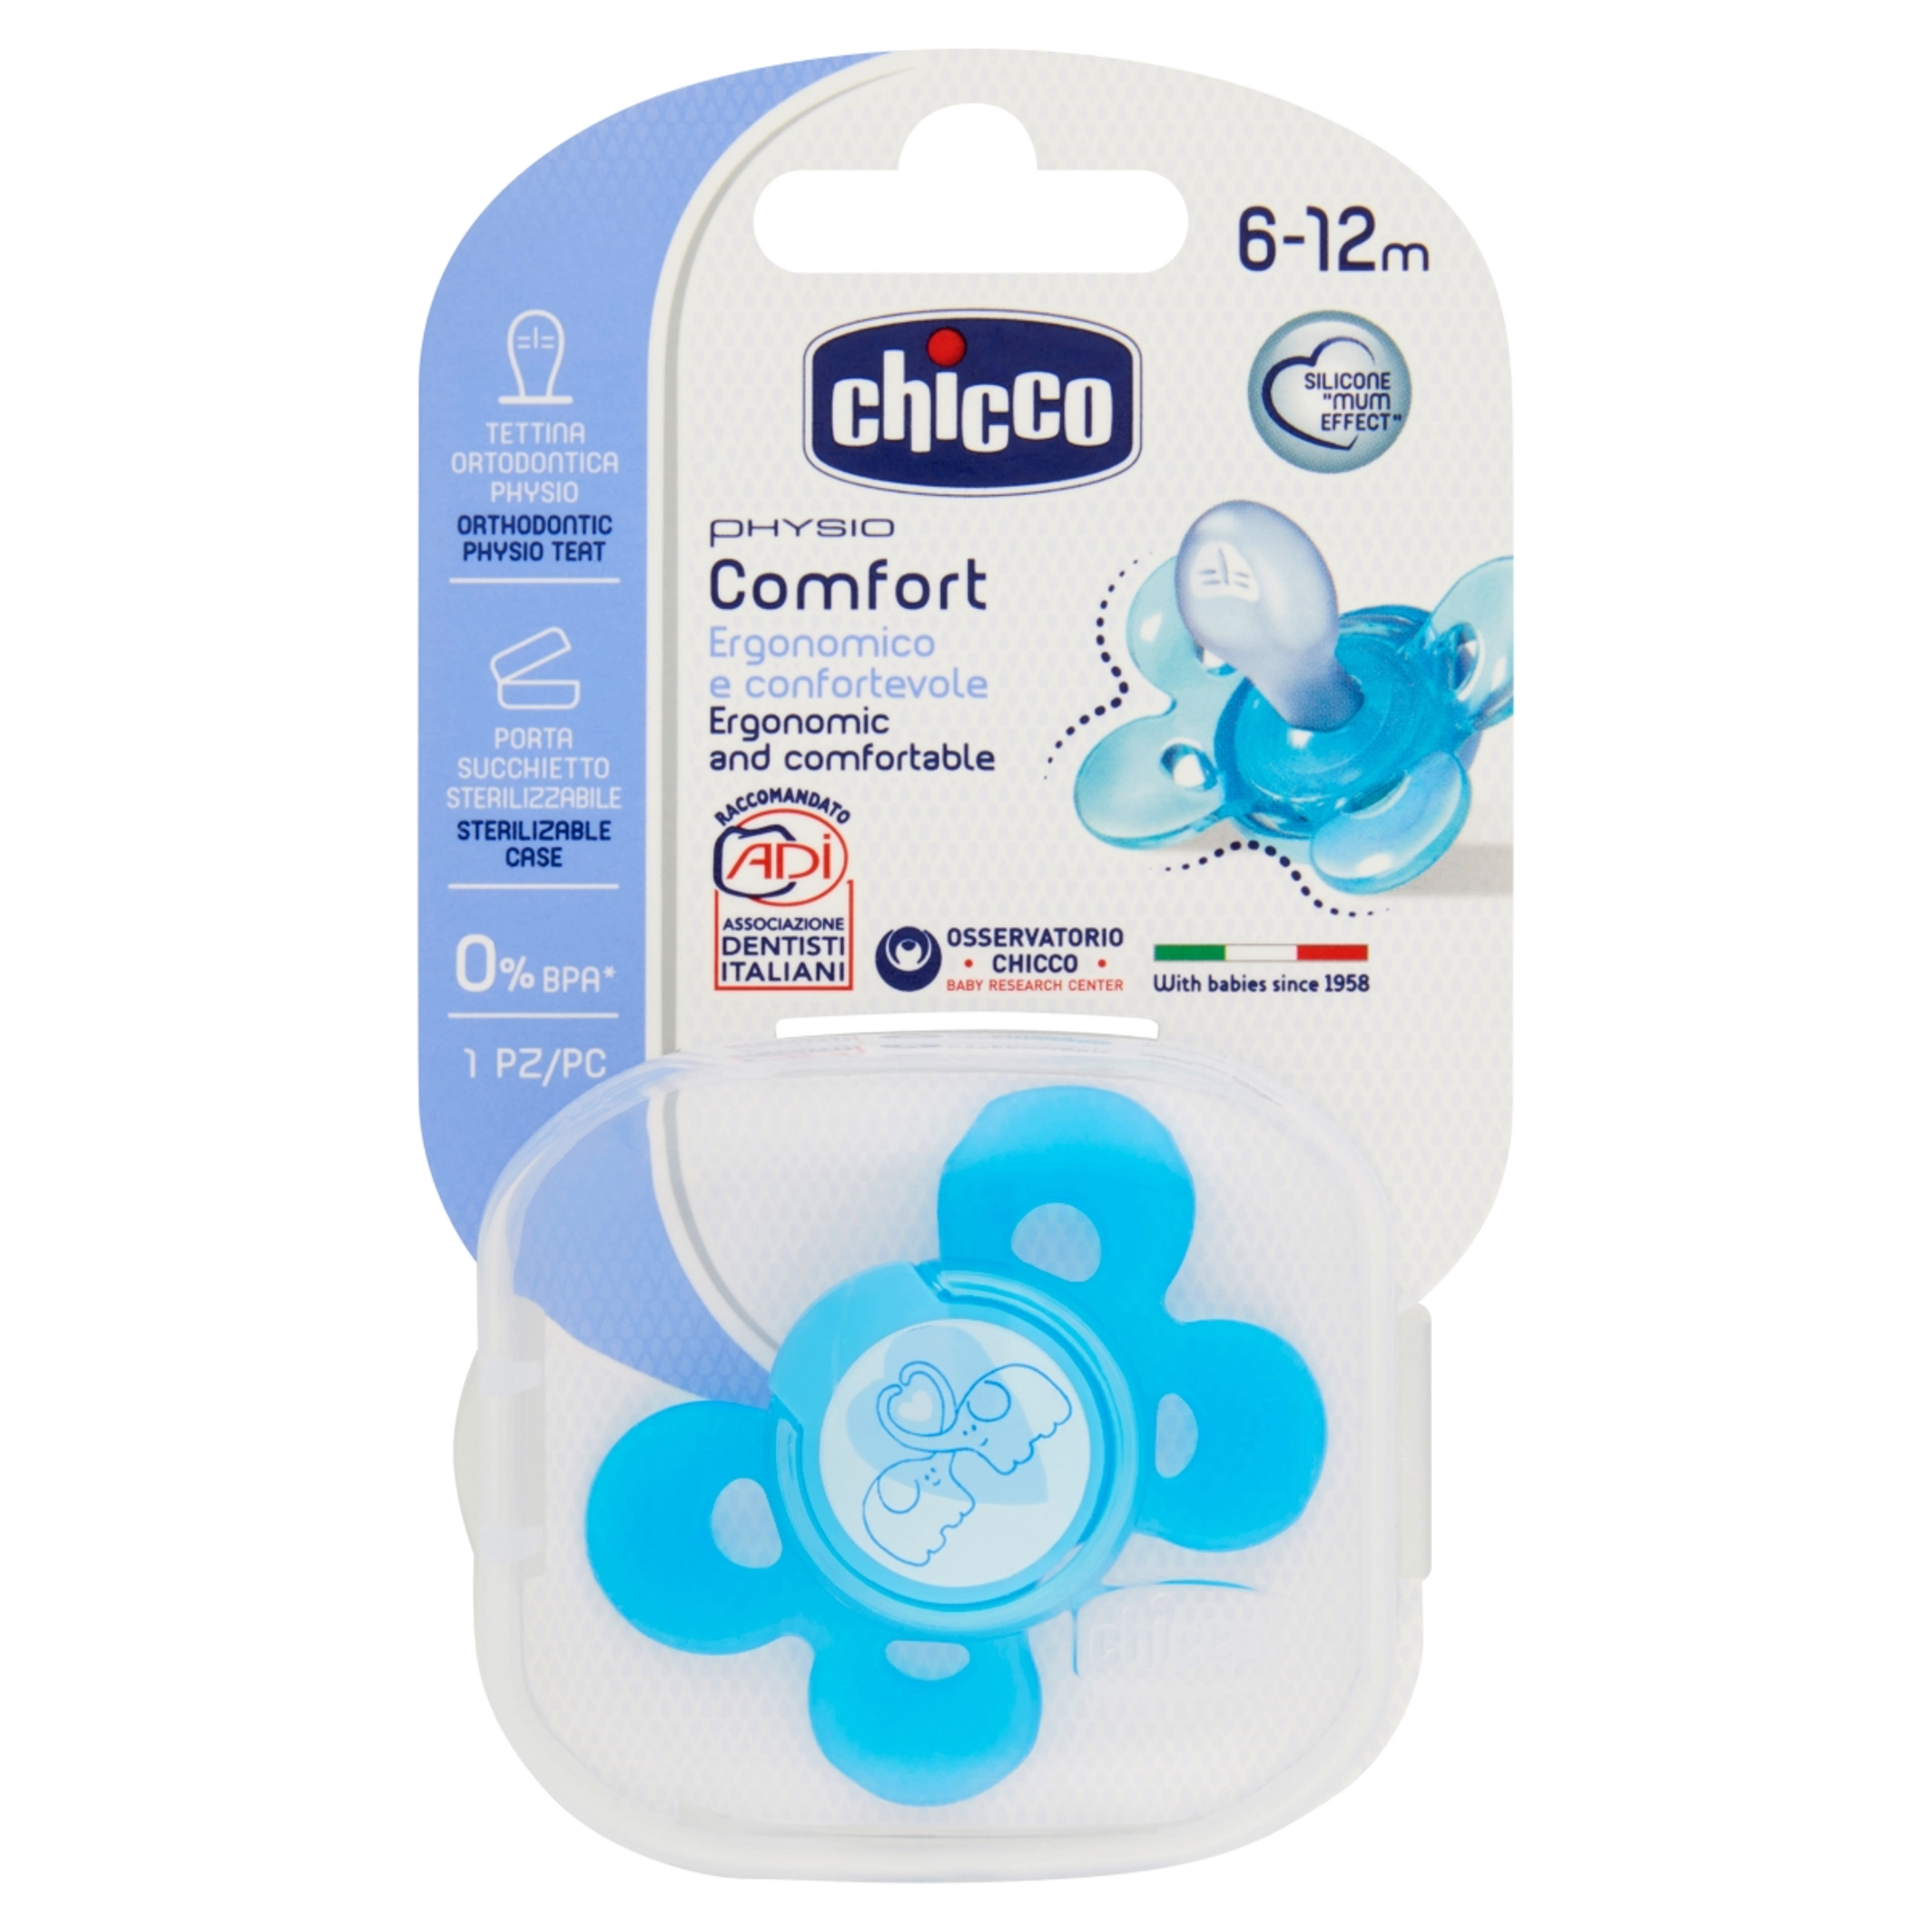 Chicco Physio Comfort szilikon cumi 6-16 hónapos kortól, kék - 1 db